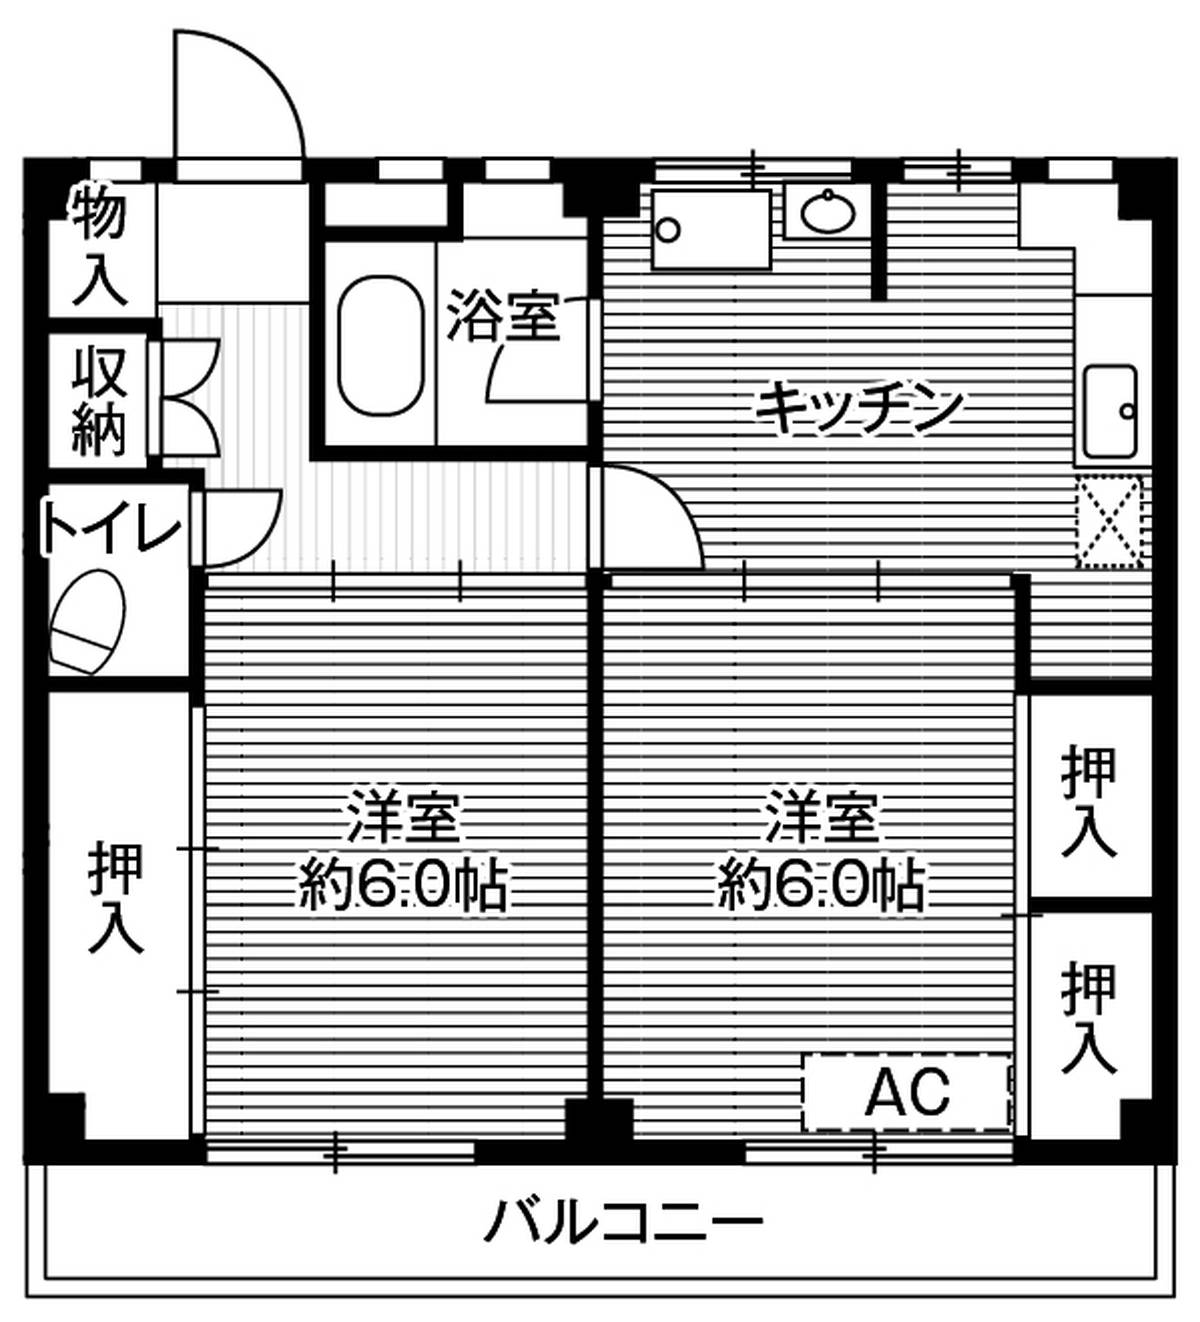 2DK floorplan of Village House Negishi in Kawaguchi-shi